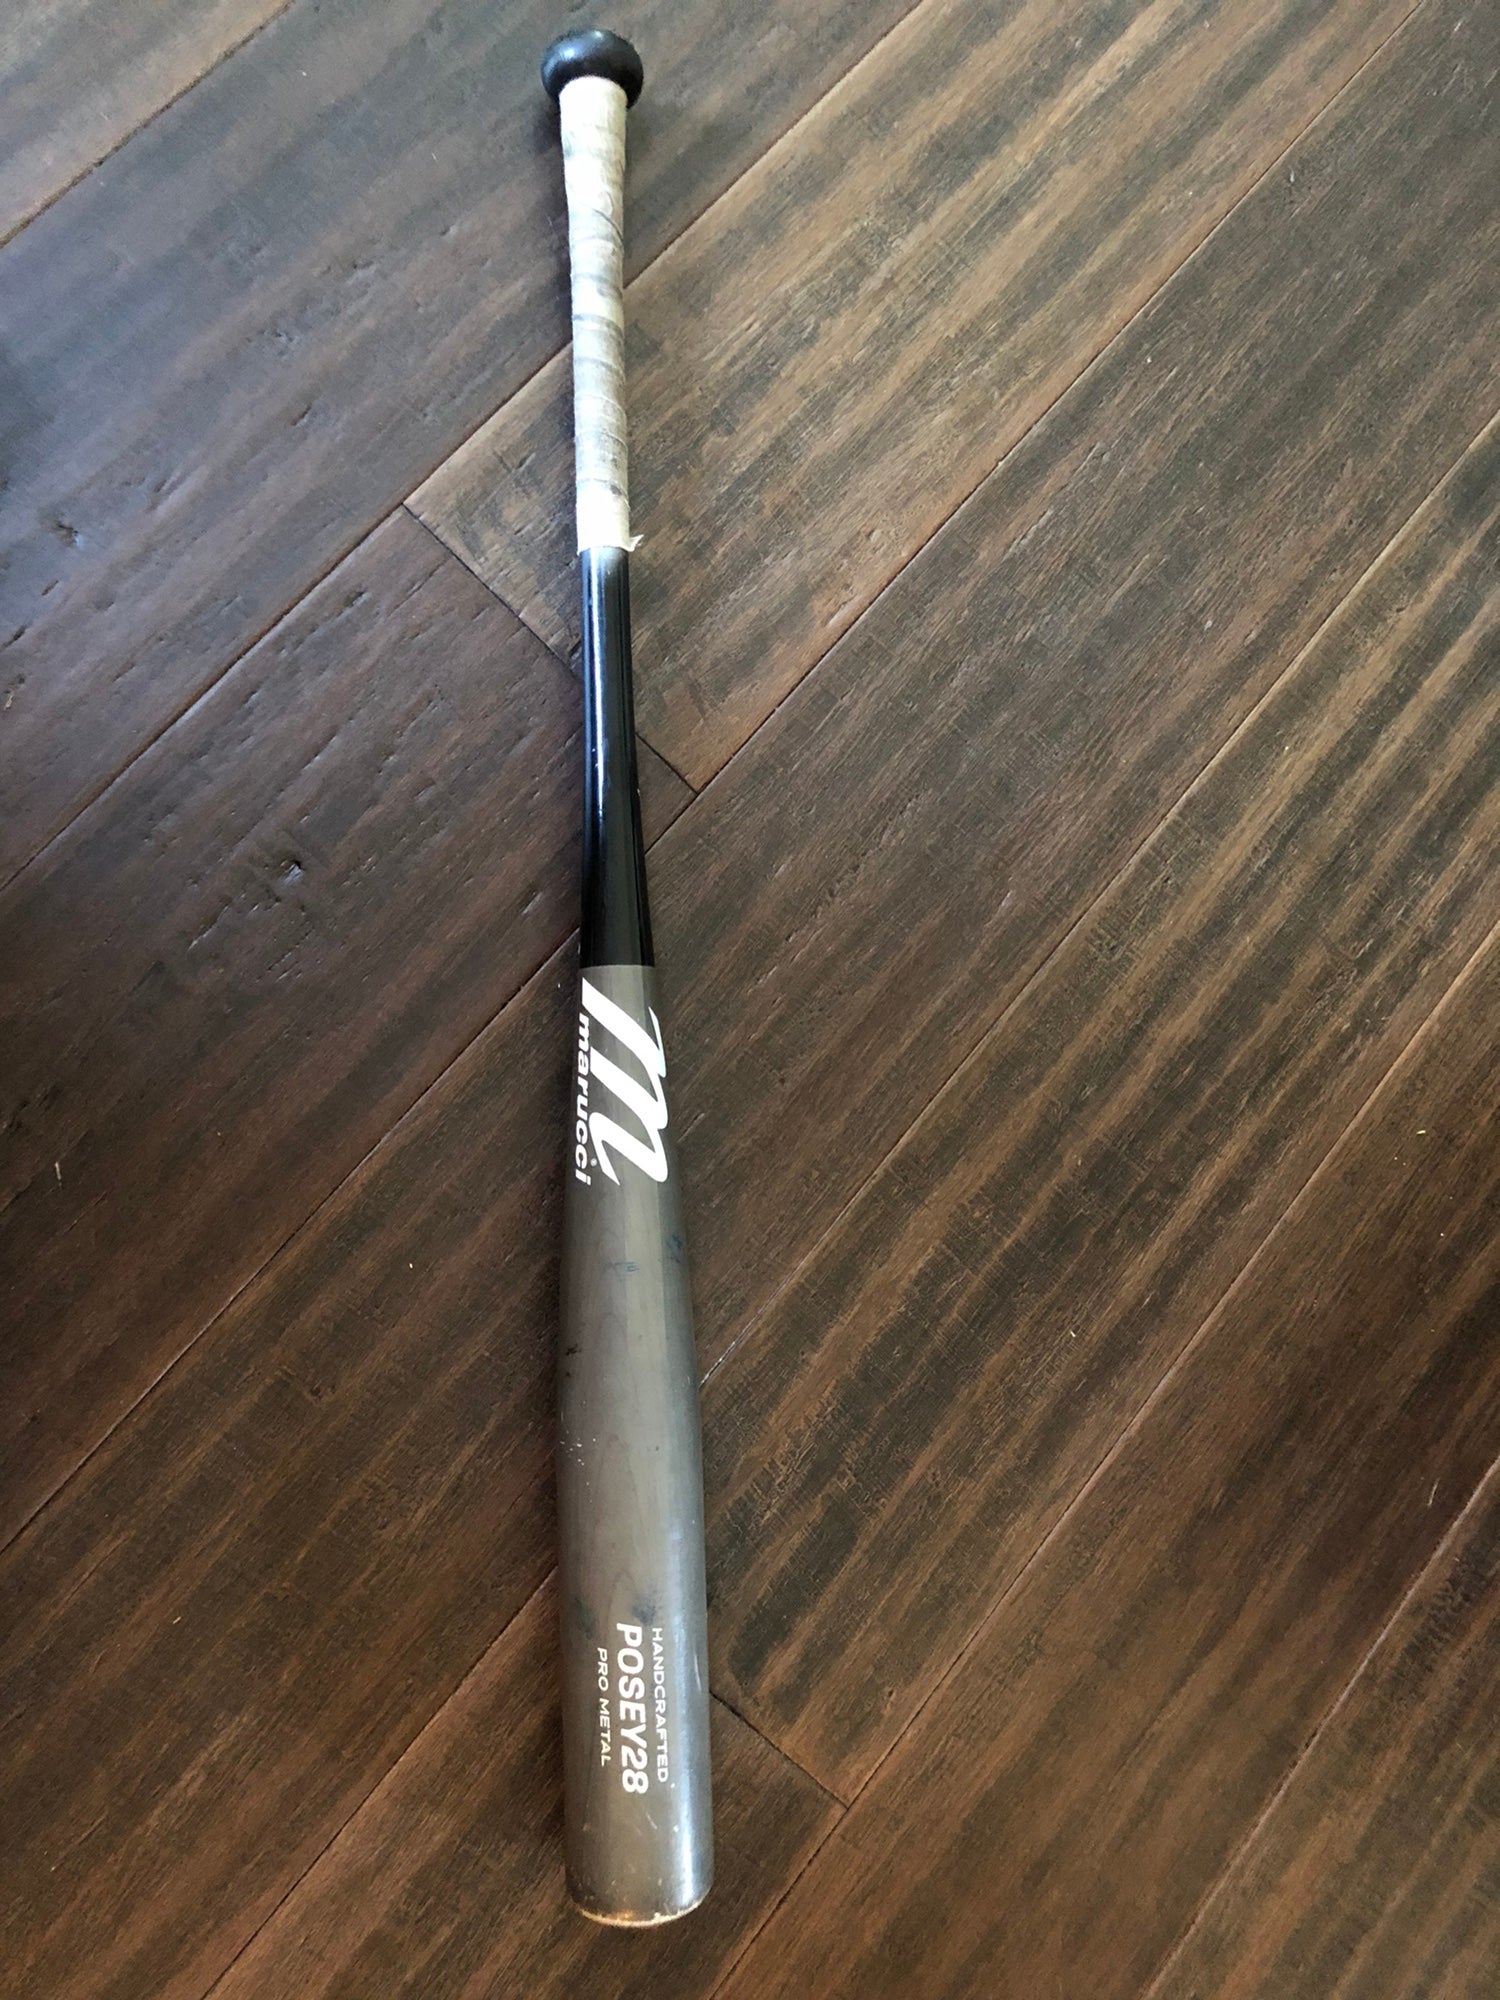 Marucci Posey28 Pro Metal BBCOR Baseball Bat MCBP28S-3330 for sale online 